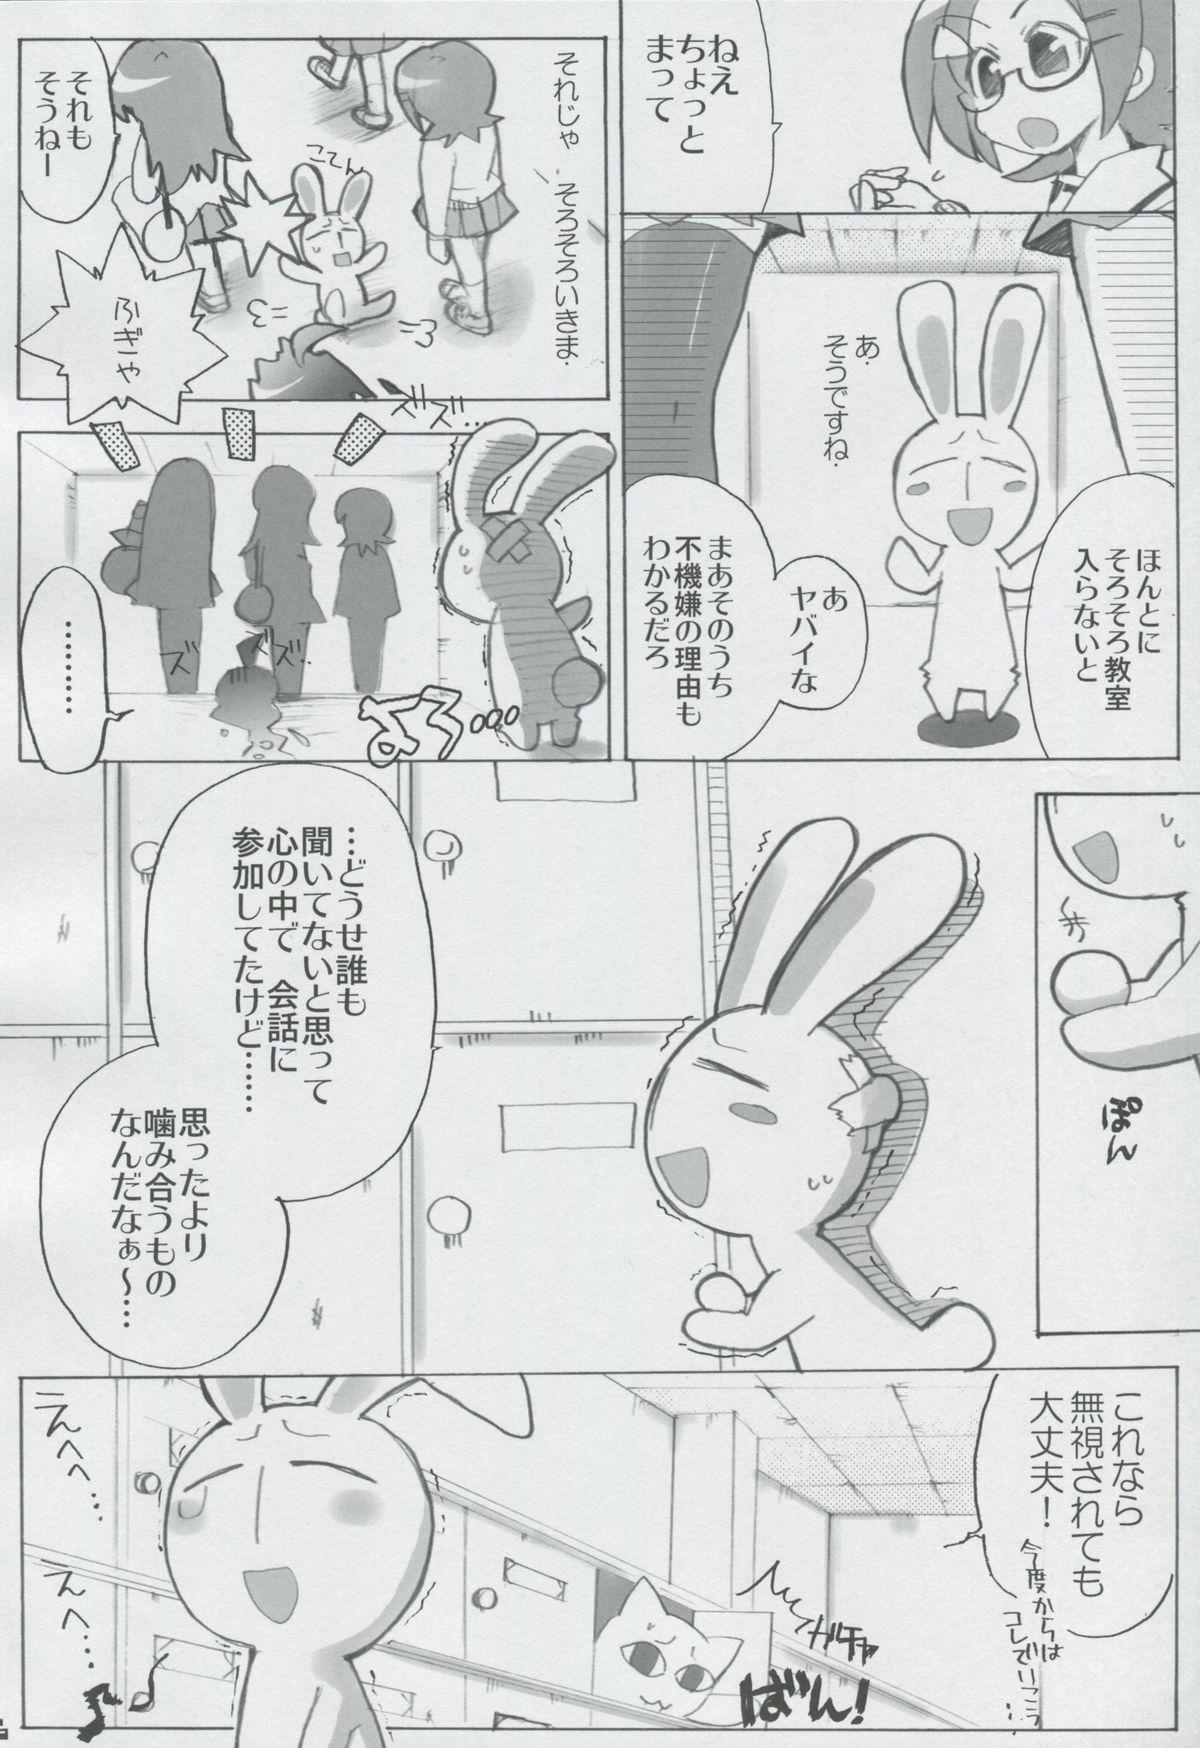 Buttfucking Momo Tsuki Monsters 1st-half - Pani poni dash Gayfuck - Page 5